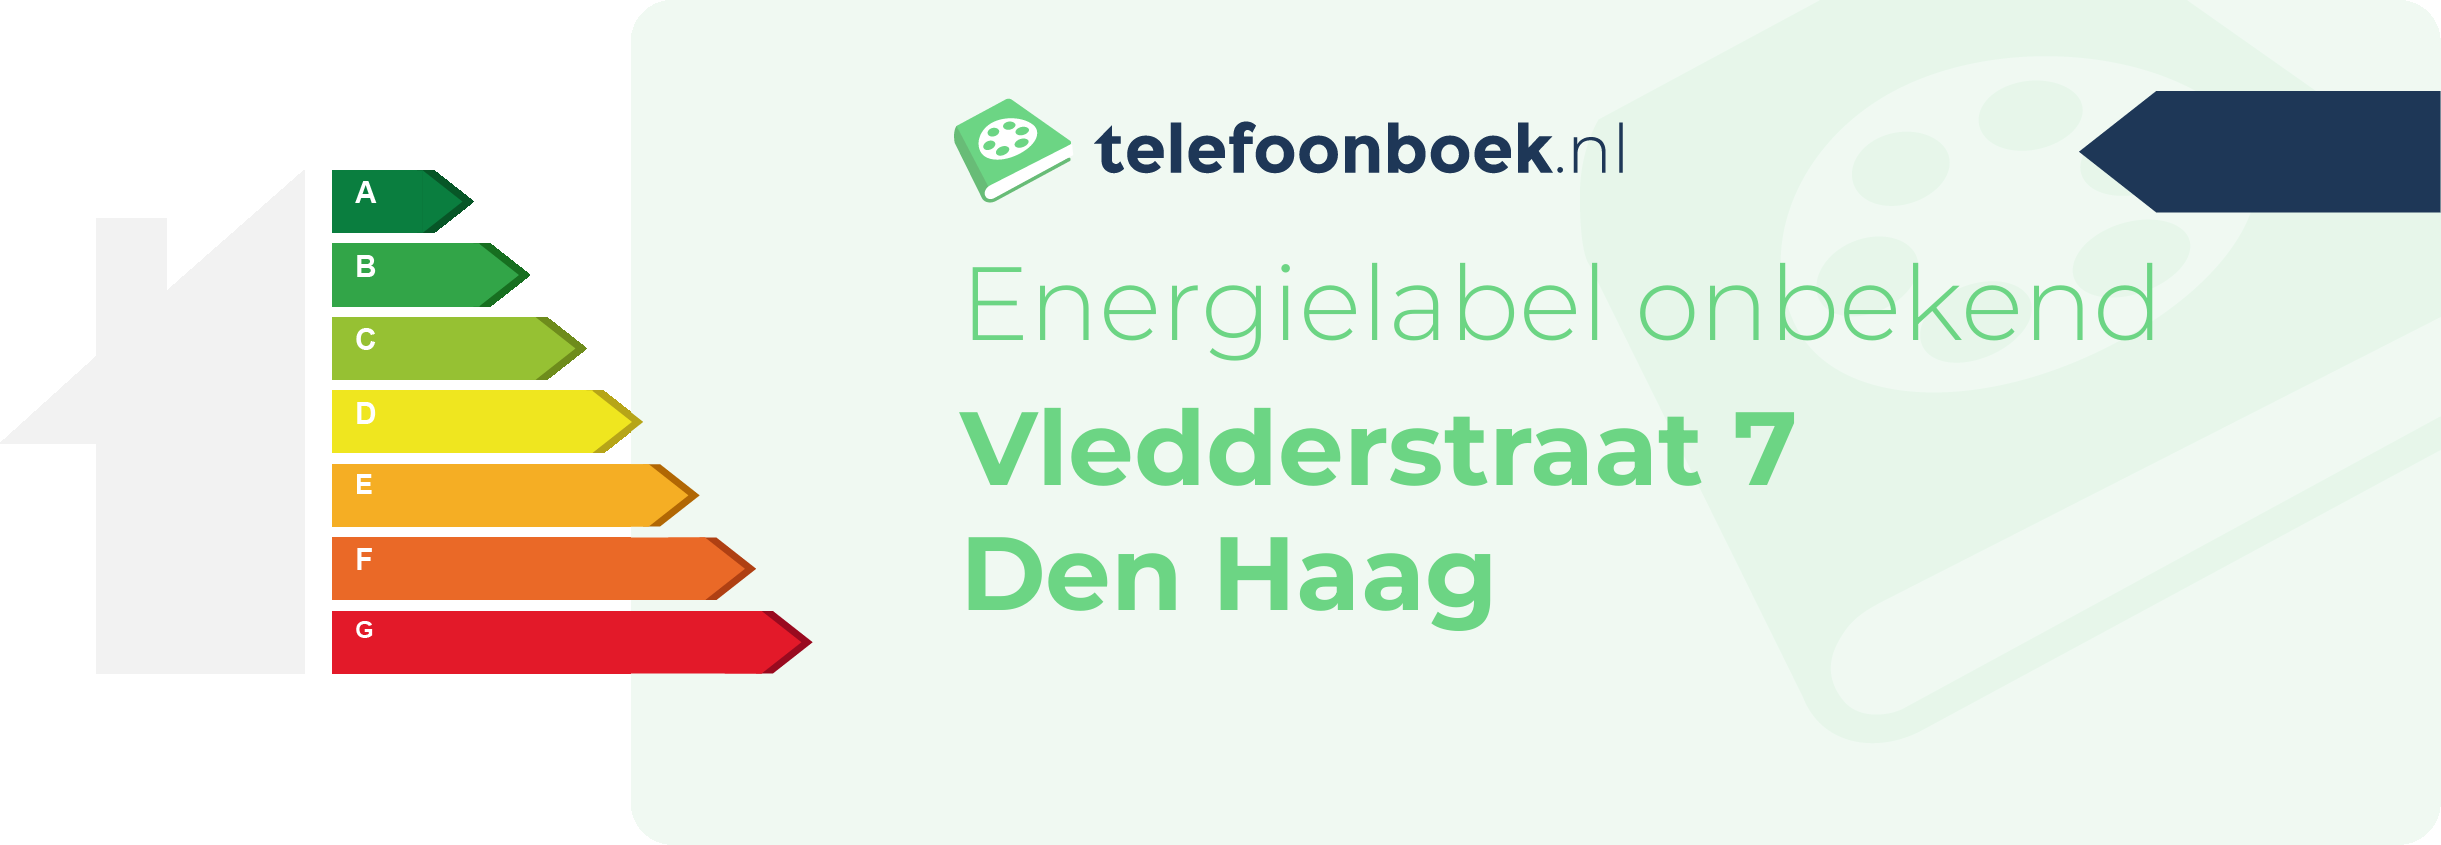 Energielabel Vledderstraat 7 Den Haag